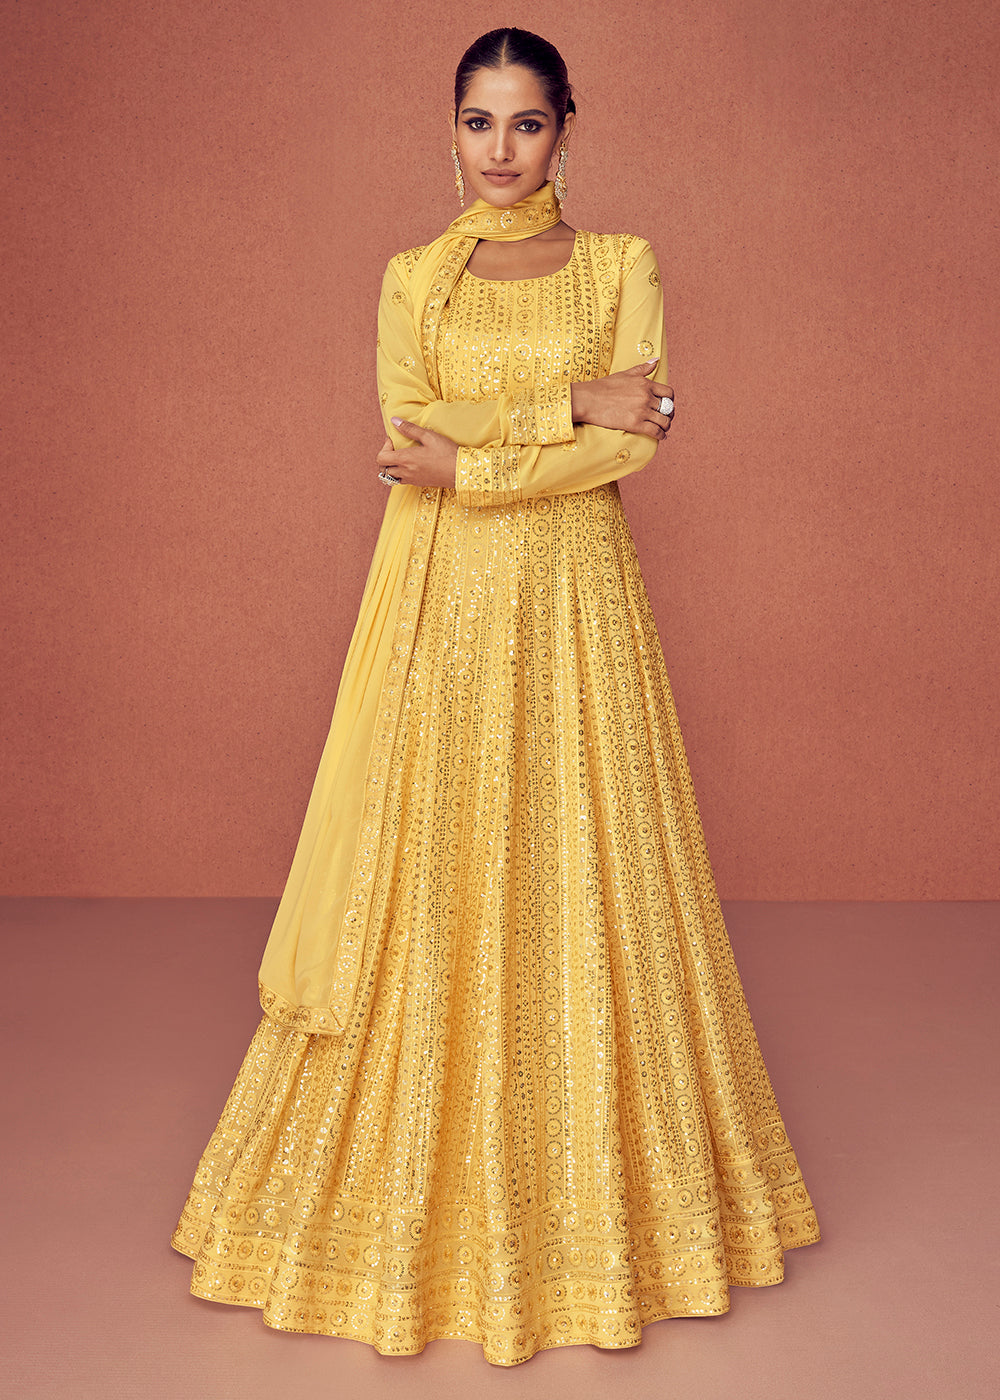 Buy Now Haldi Yellow Bridesmaid Wear Wedding Wear Anarkali Suit Online in USA, UK, Australia, New Zealand, Canada & Worldwide at Empress Clothing.